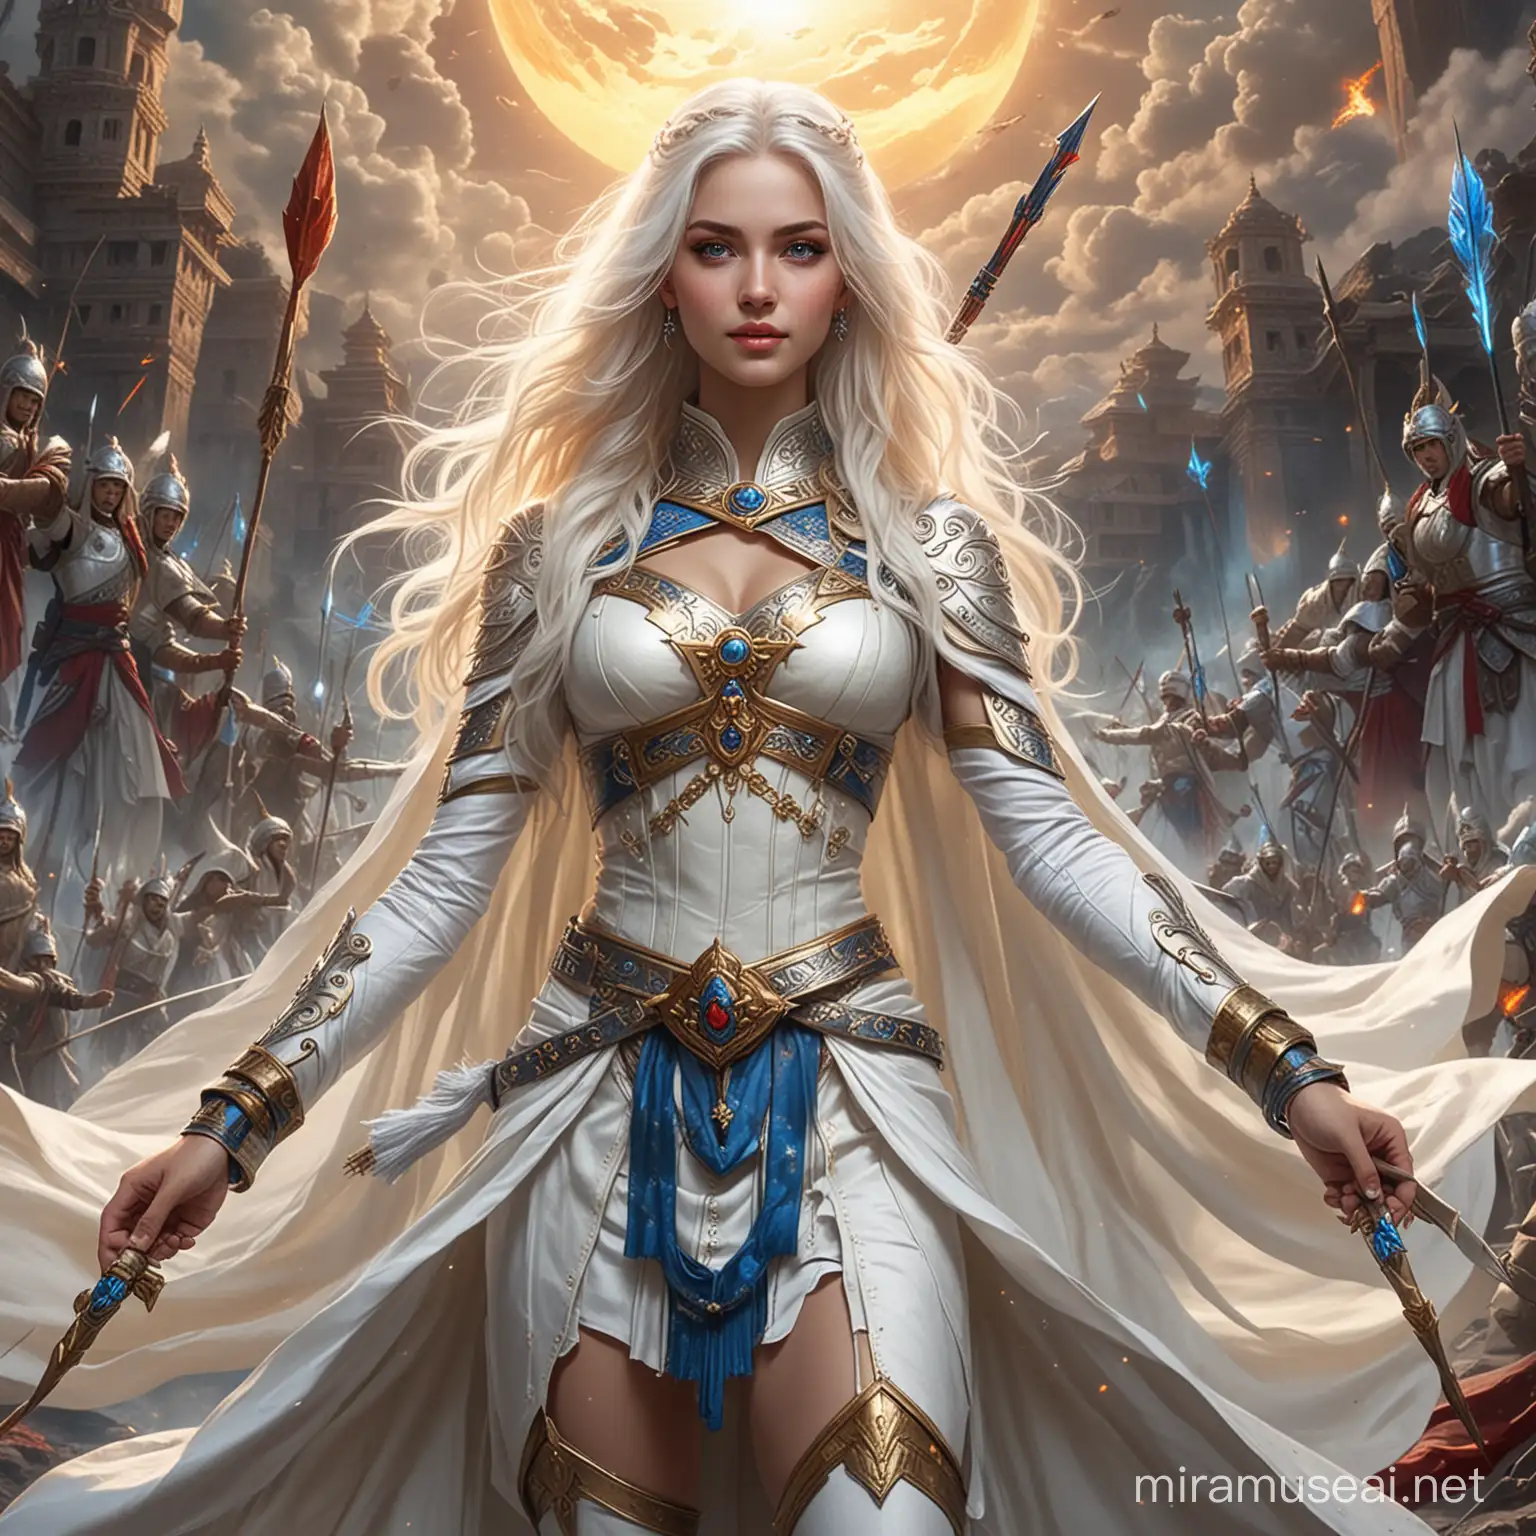 Empress Goddess in Battle WhiteHaired Teen Heroine Amidst Cosmic Energy and Warriors